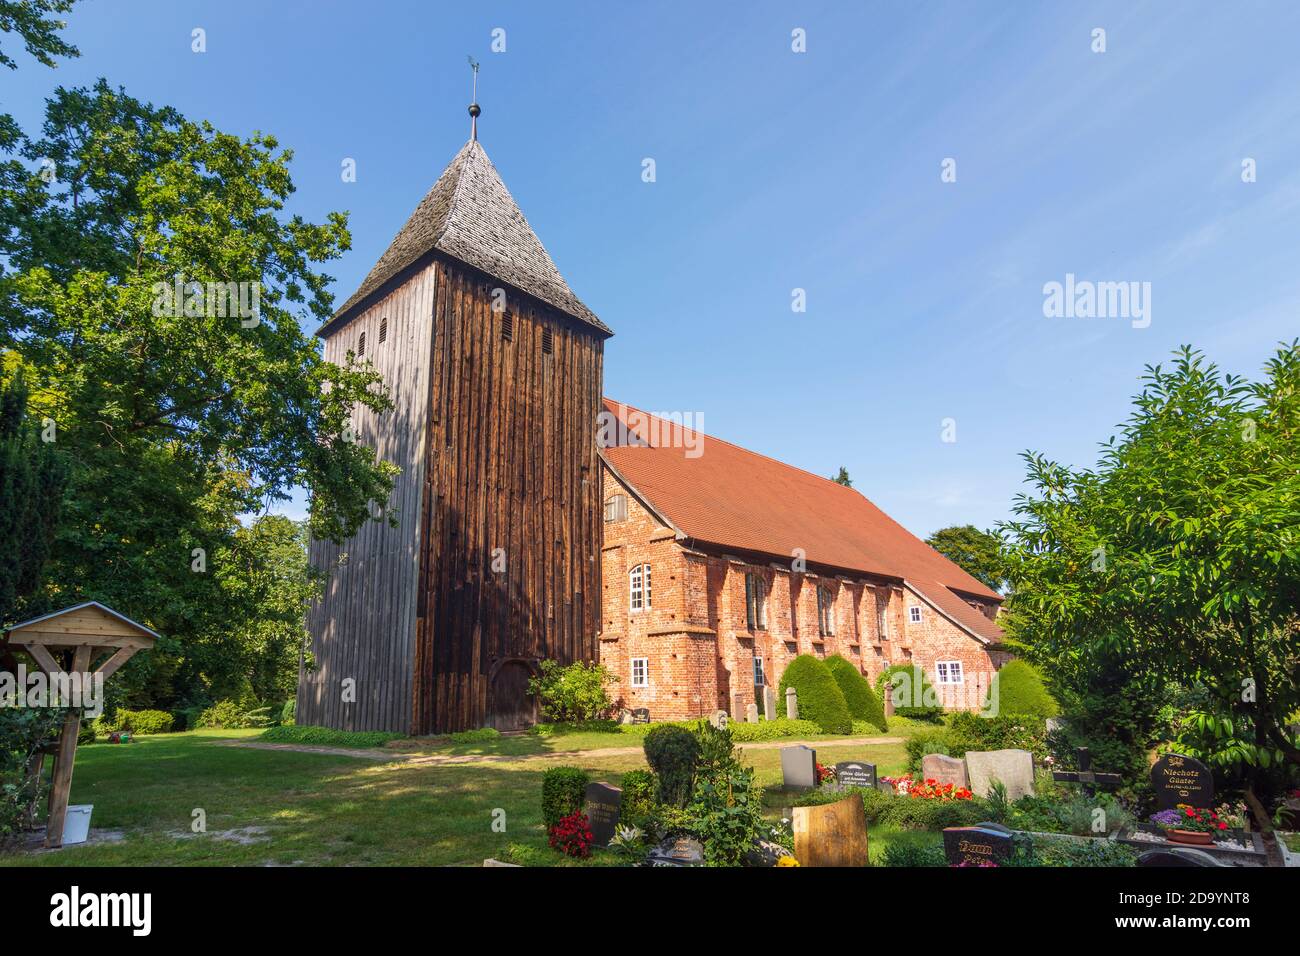 Prerow: Seemannskirche (église des gens de mer), Ostsee (mer Baltique), péninsule de Darß (Darss), Mecklembourg-Poméranie-Occidentale, Allemagne Banque D'Images